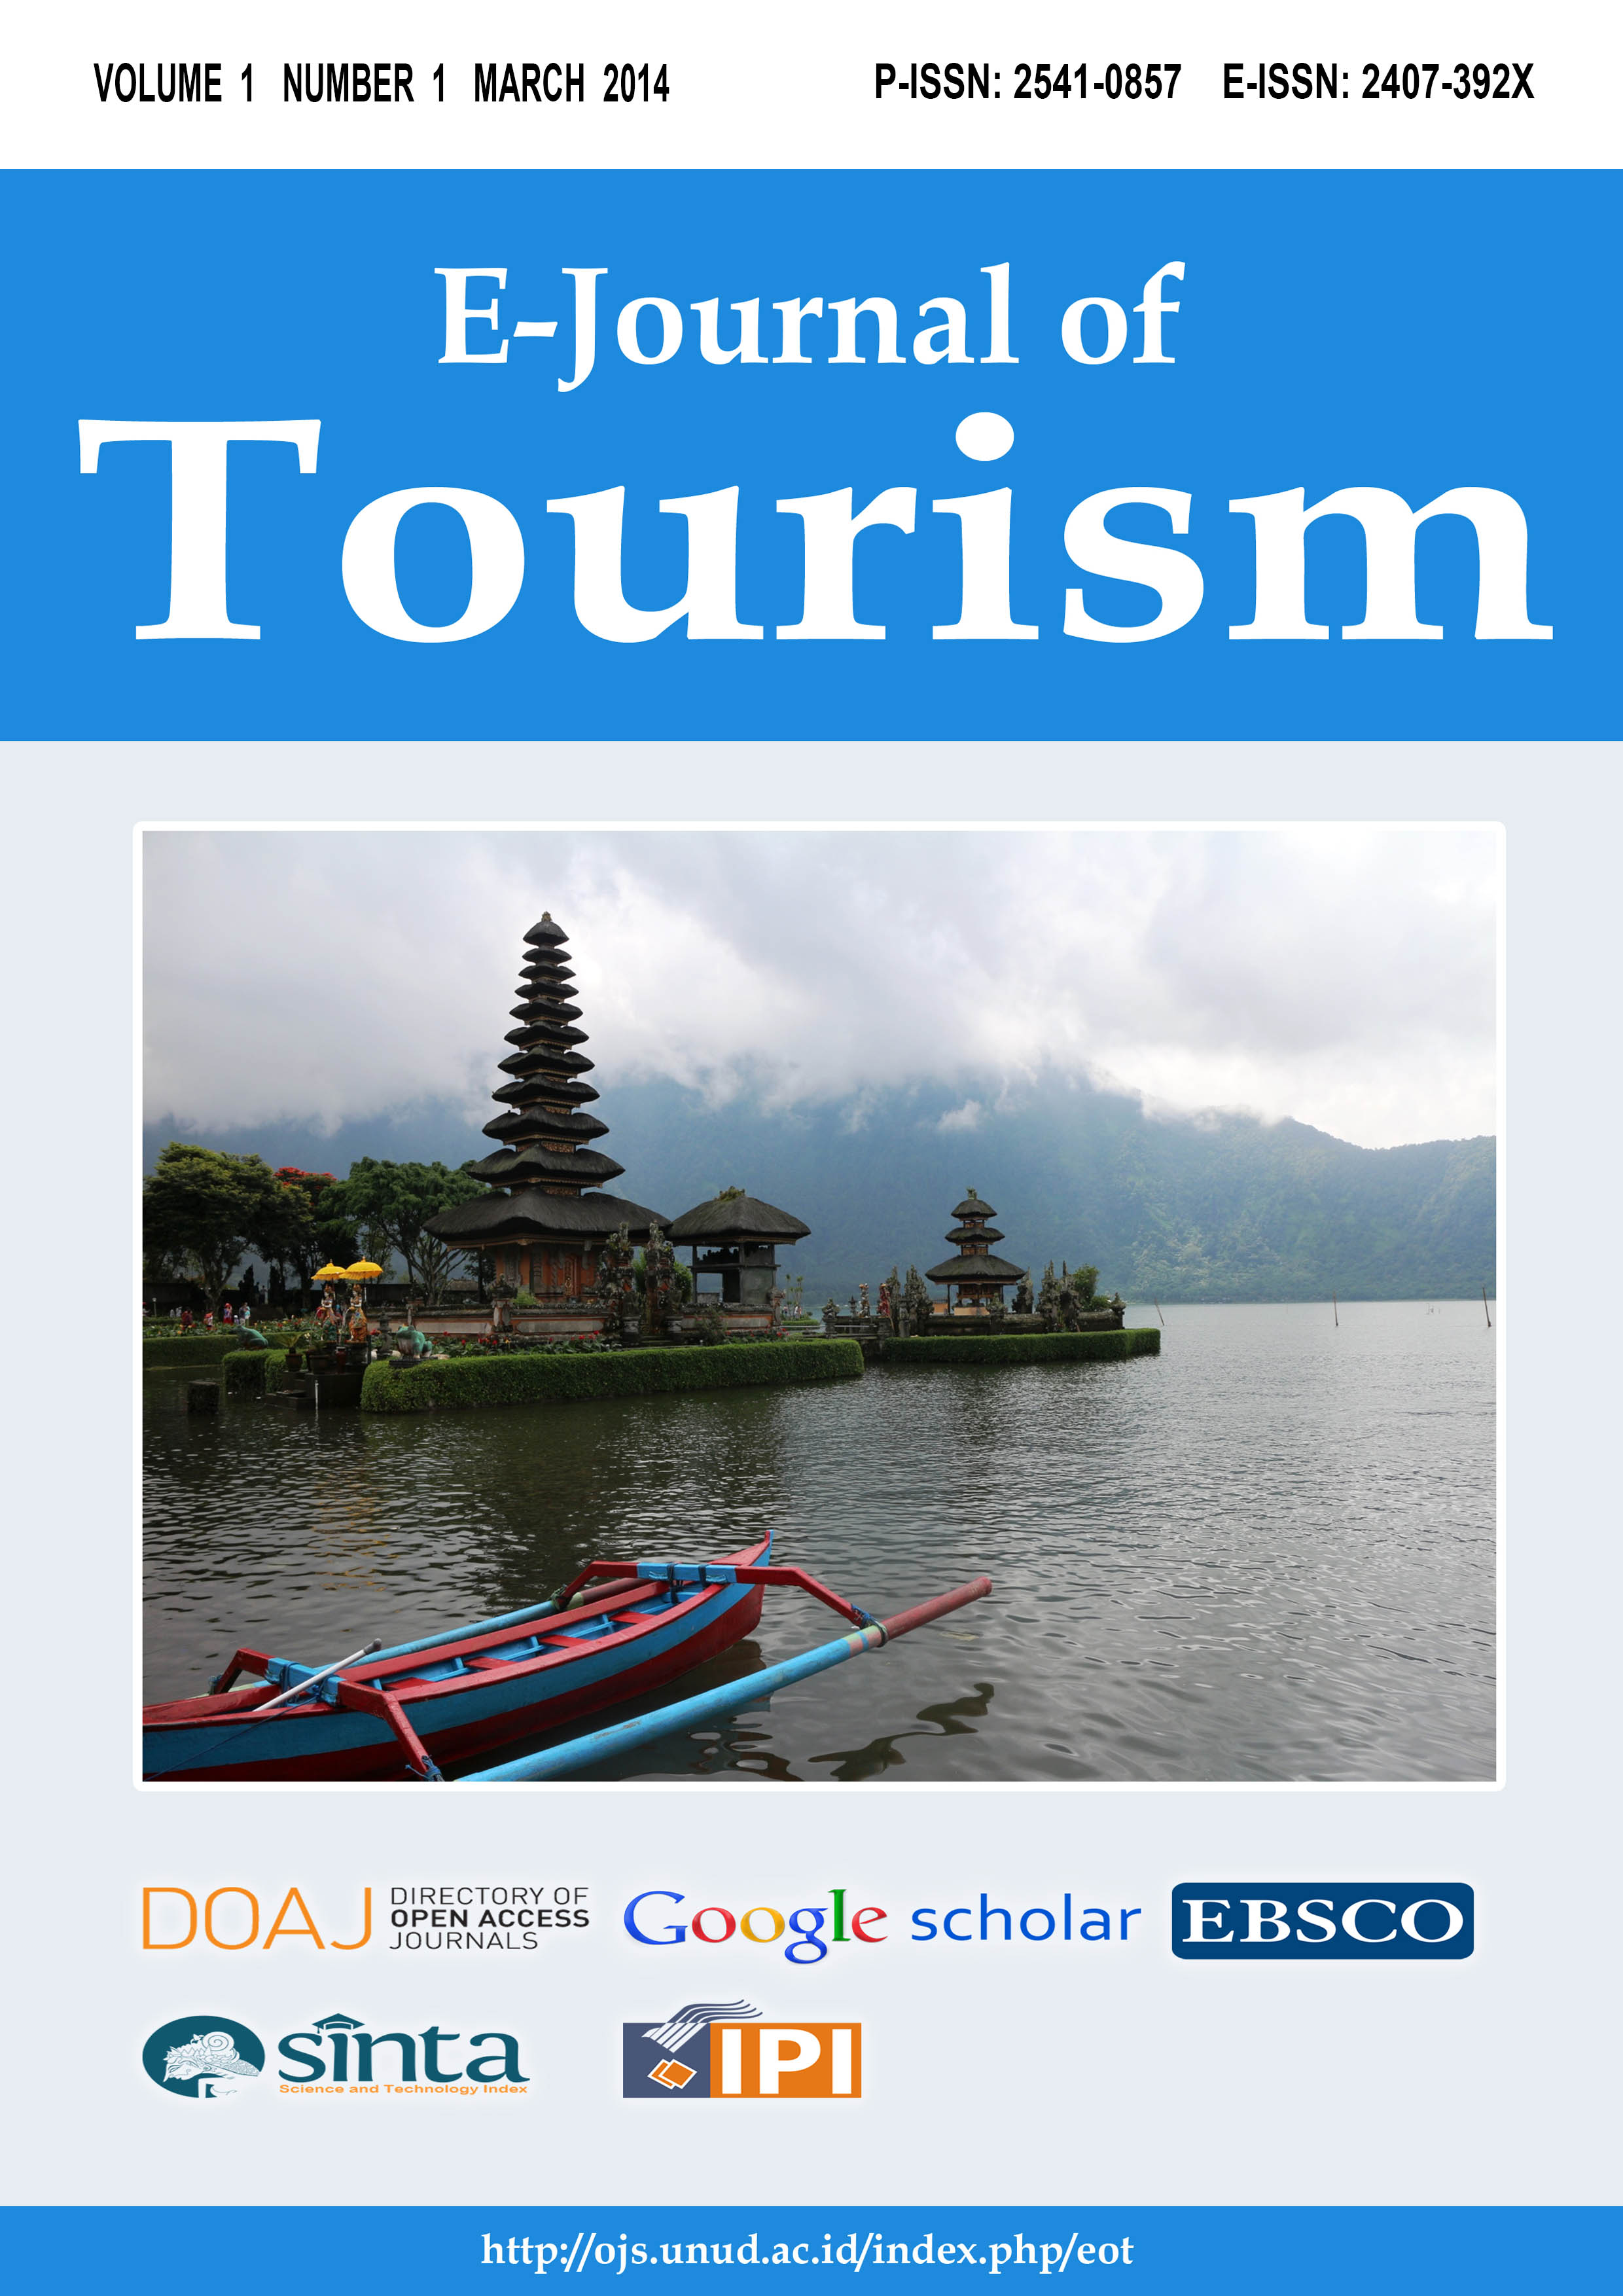 tourism destination pdf journal